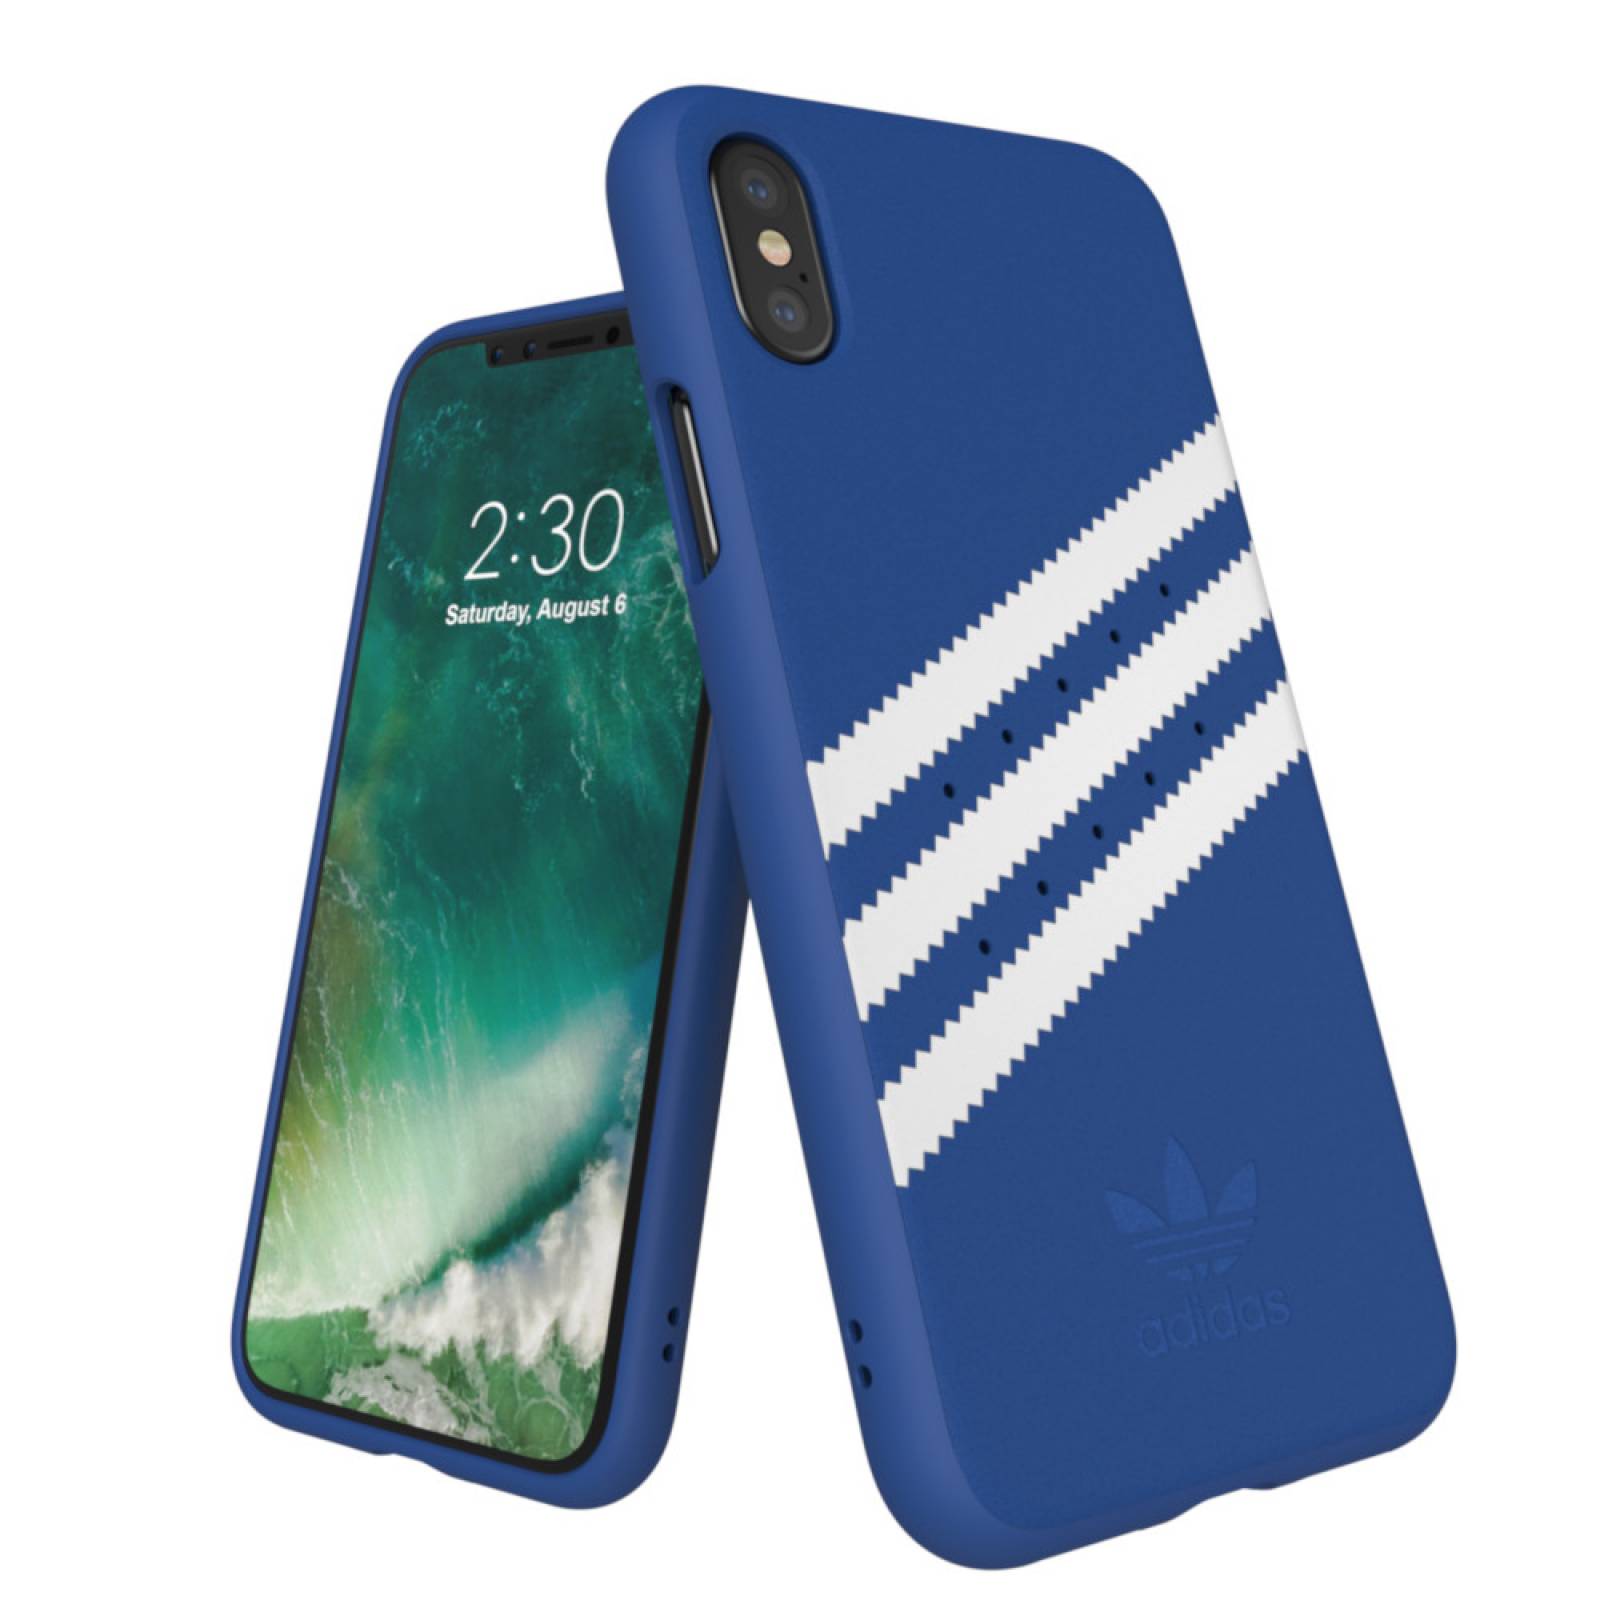 Funda Stripes Adidas Originals iPhone XS y X Gamuza Azul